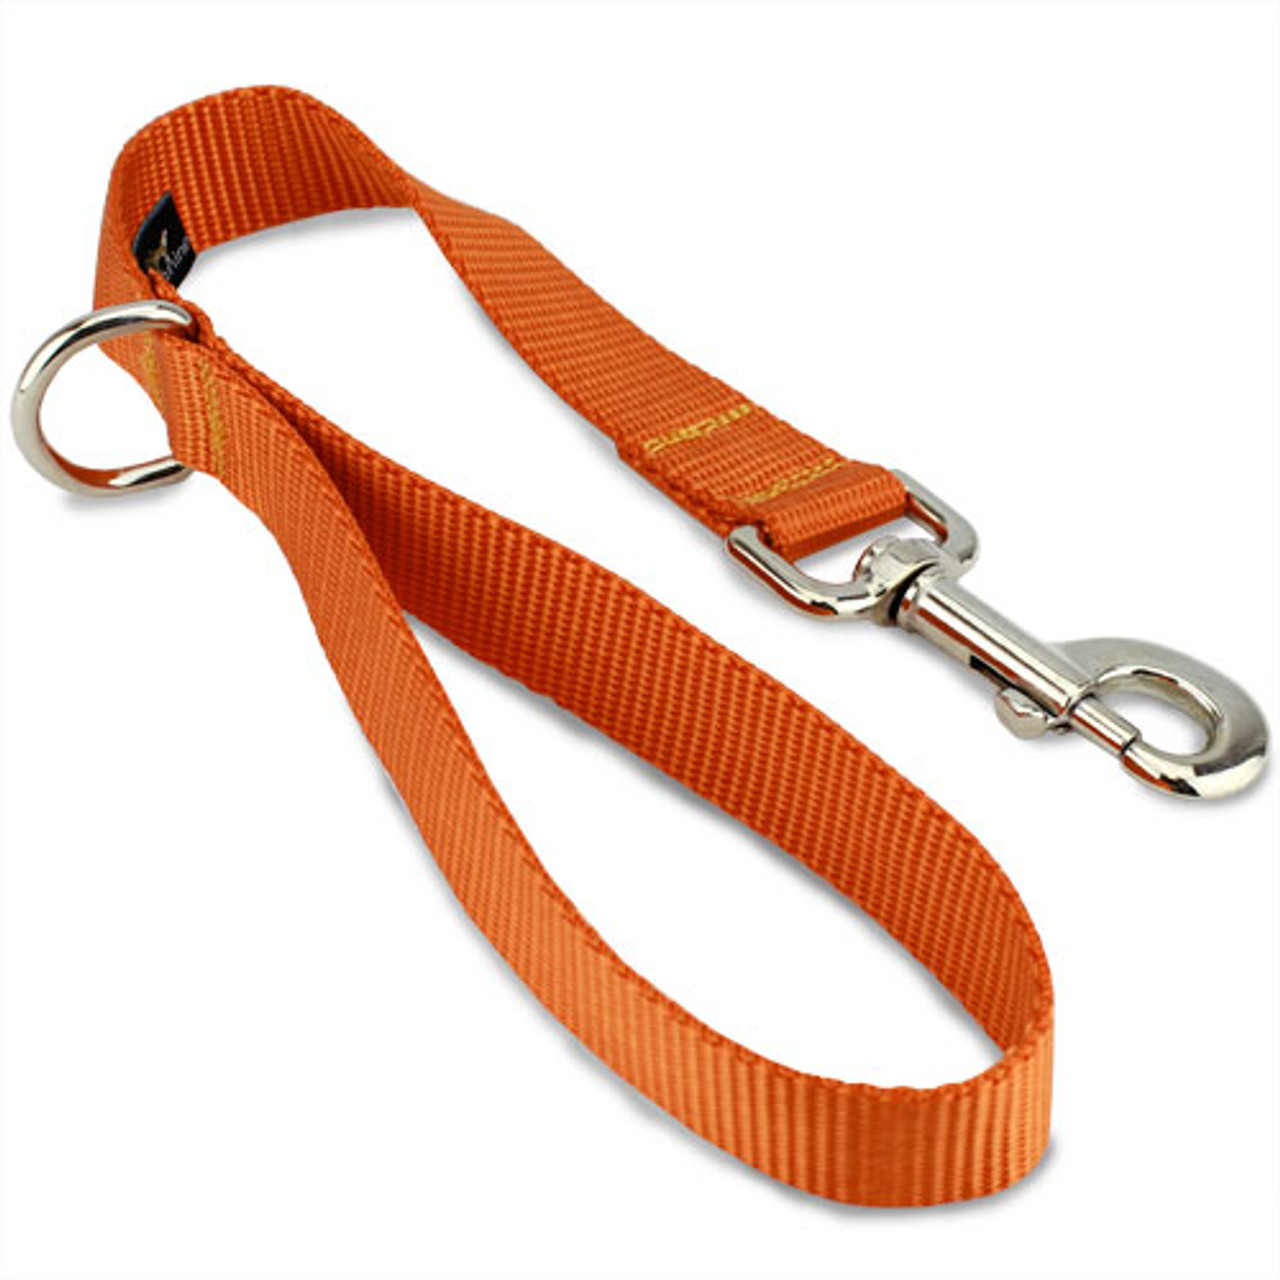 Orange Nylon Short Leash, Traffic Leash, City Leash, Training Leash for Dogs